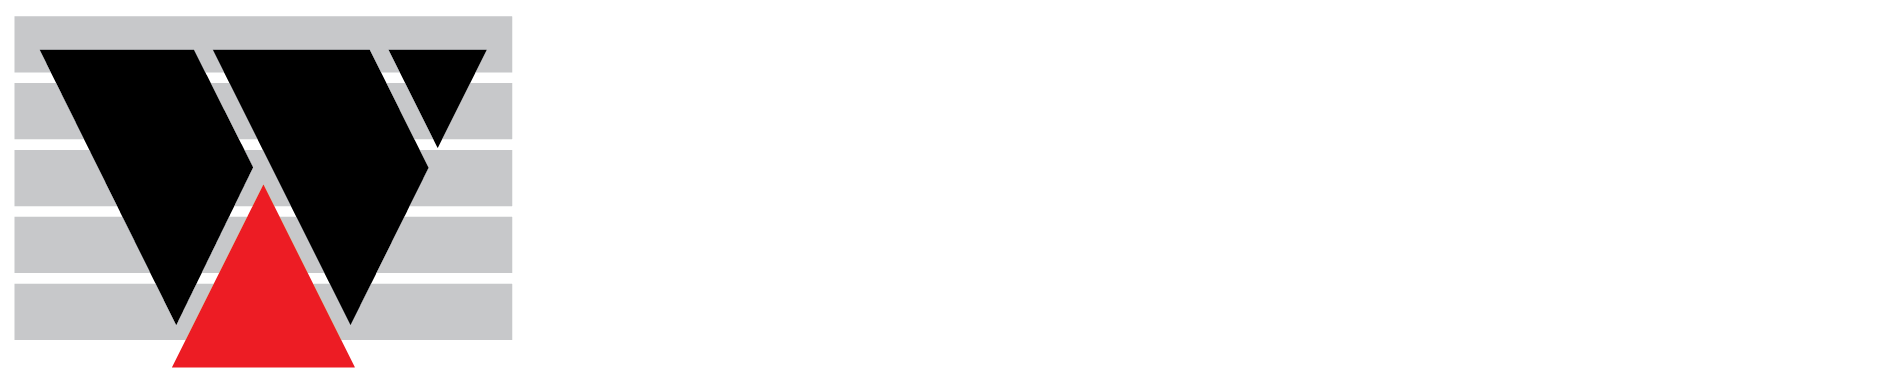 Windowmaker Software Logo